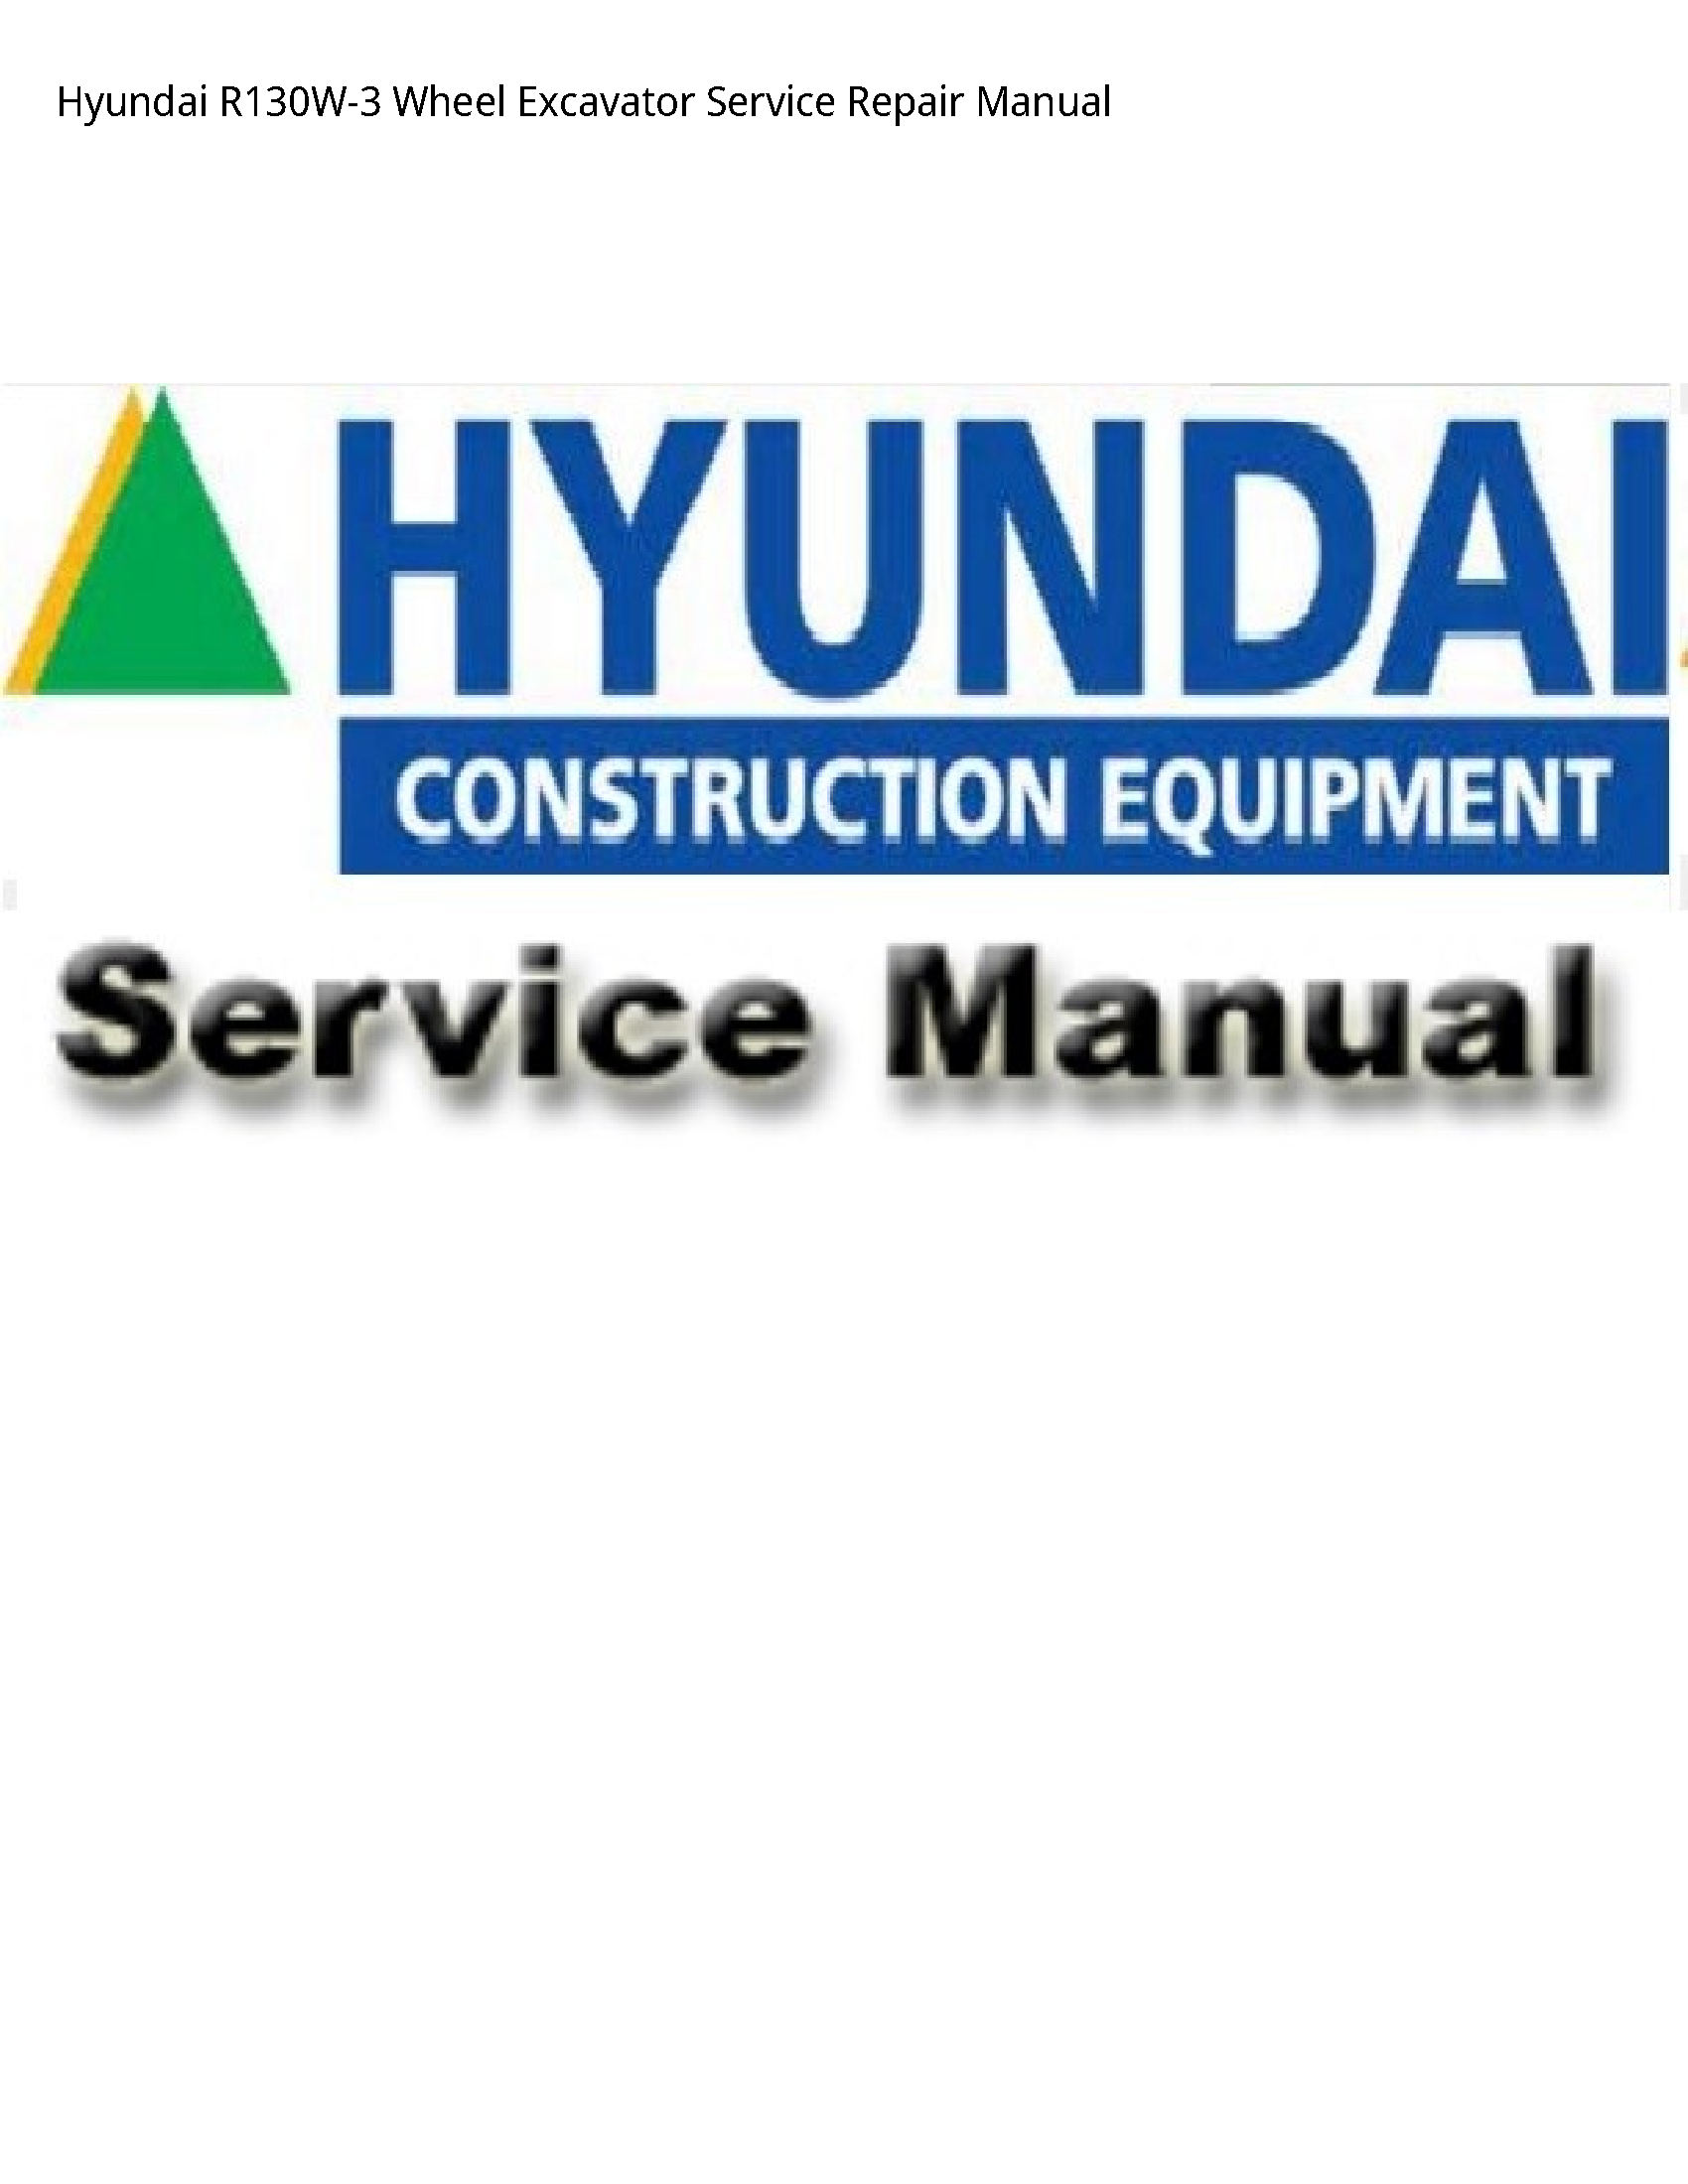 Hyundai R130W-3 Wheel Excavator manual